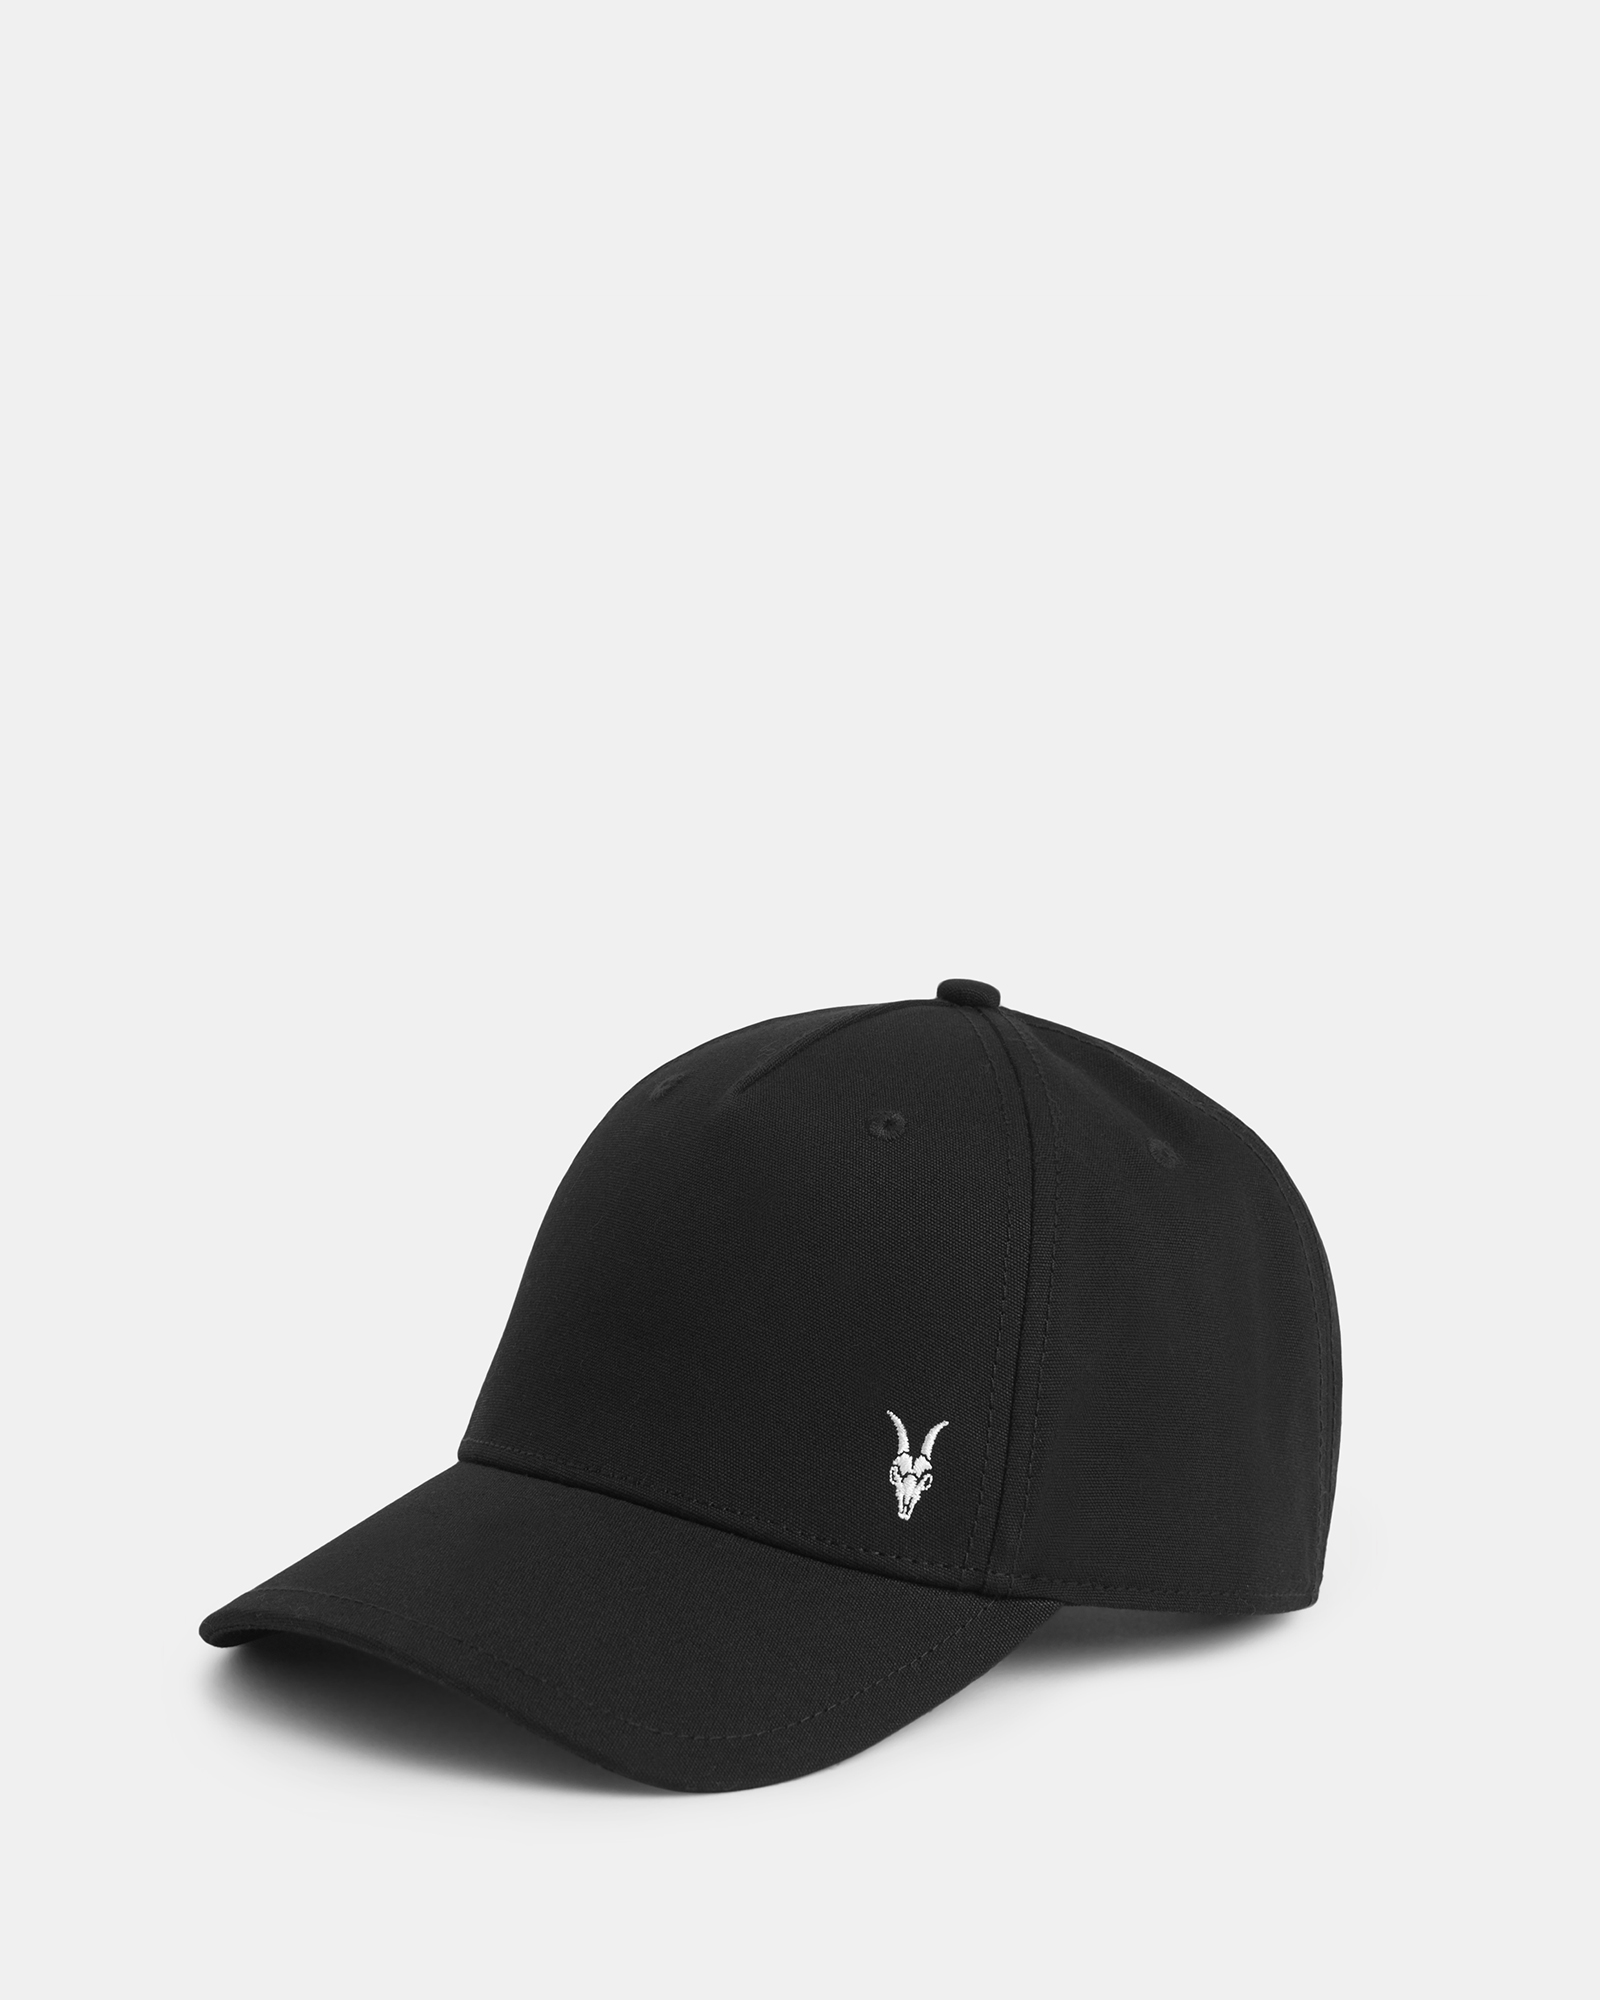 AllSaints Fen Embroidered Baseball Cap,, Black, Size: One Size